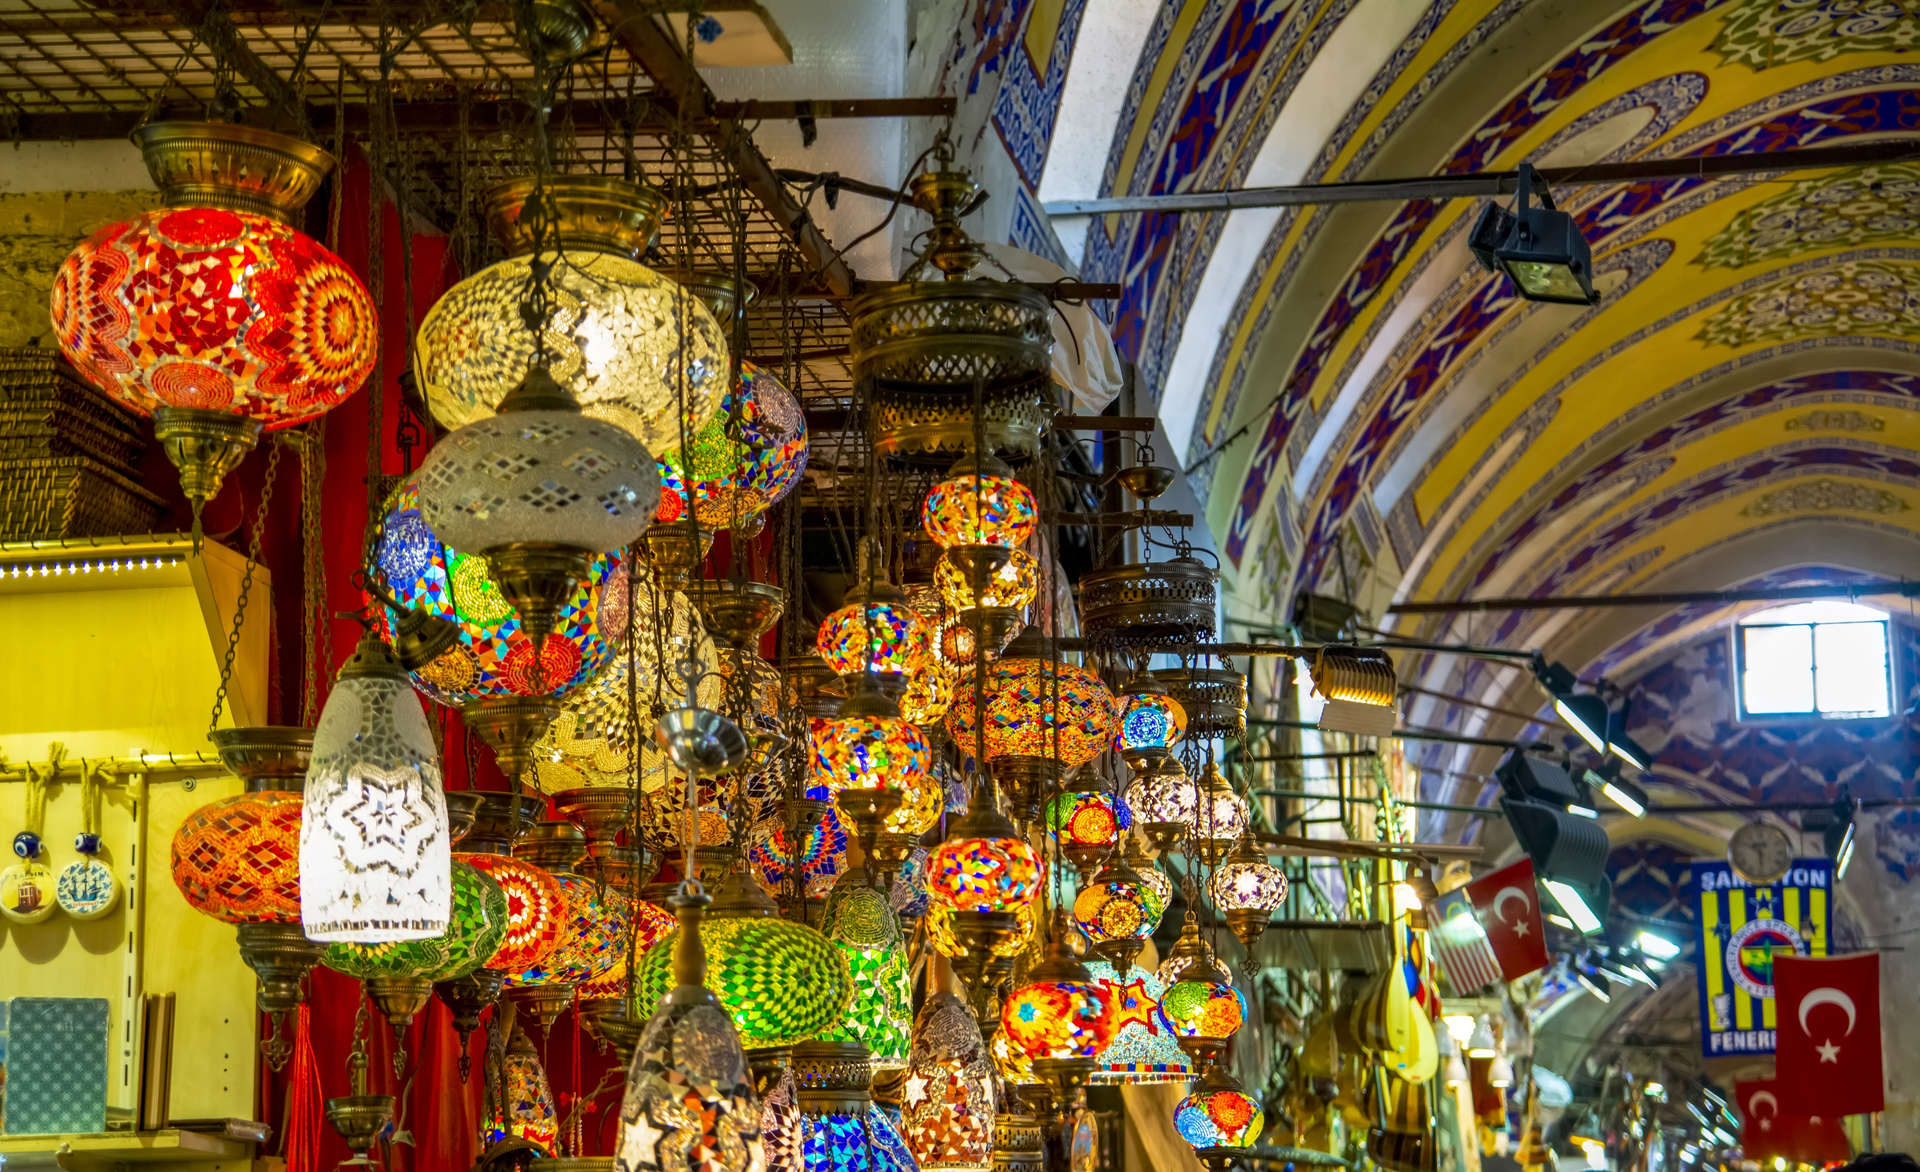 Bazaar quarter, Market Street at the Grand Bazaar, Kapali Carsi, Istanbul, Turkey